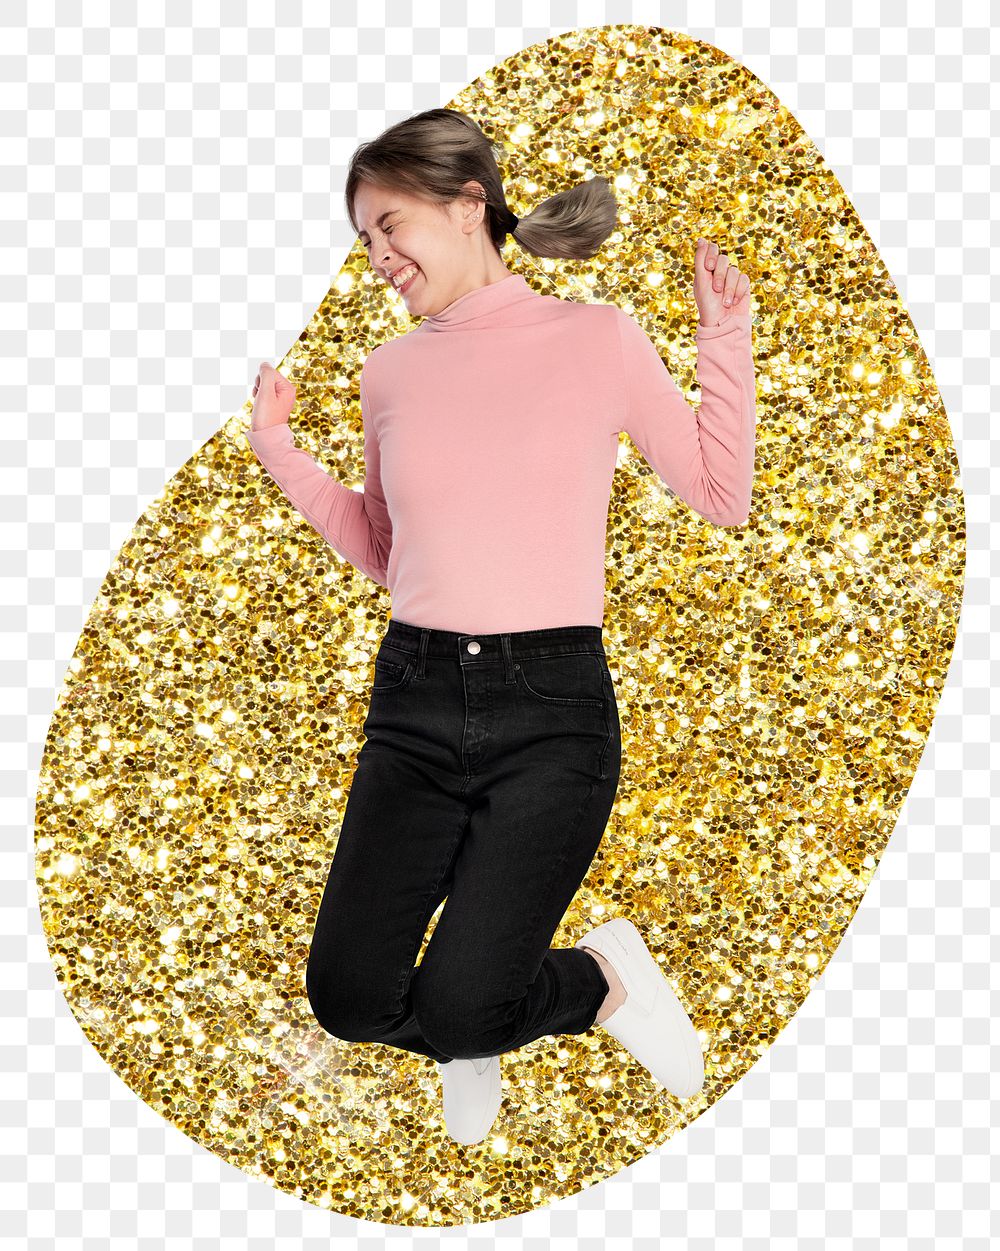 Jumping girl png sticker, gold glitter blob shape, transparent background